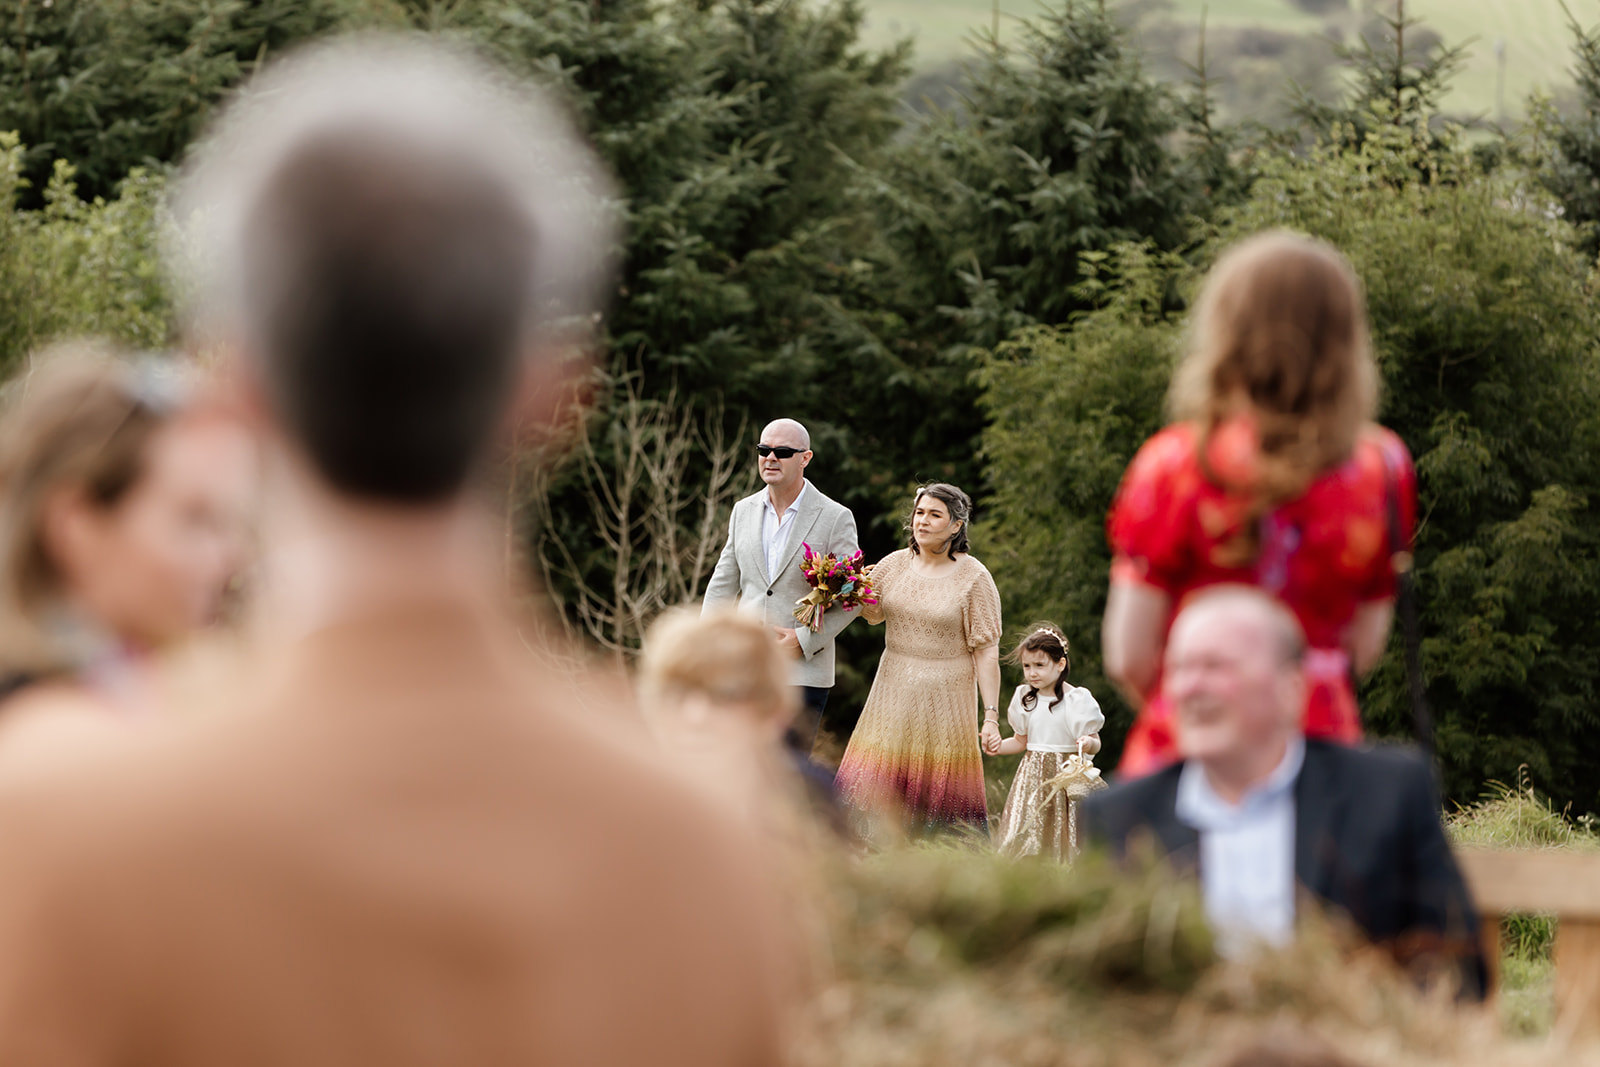 Festival wedding Ireland, West Cork, Camus Farm, Sarah Kate photography, outdoor wedding venue 